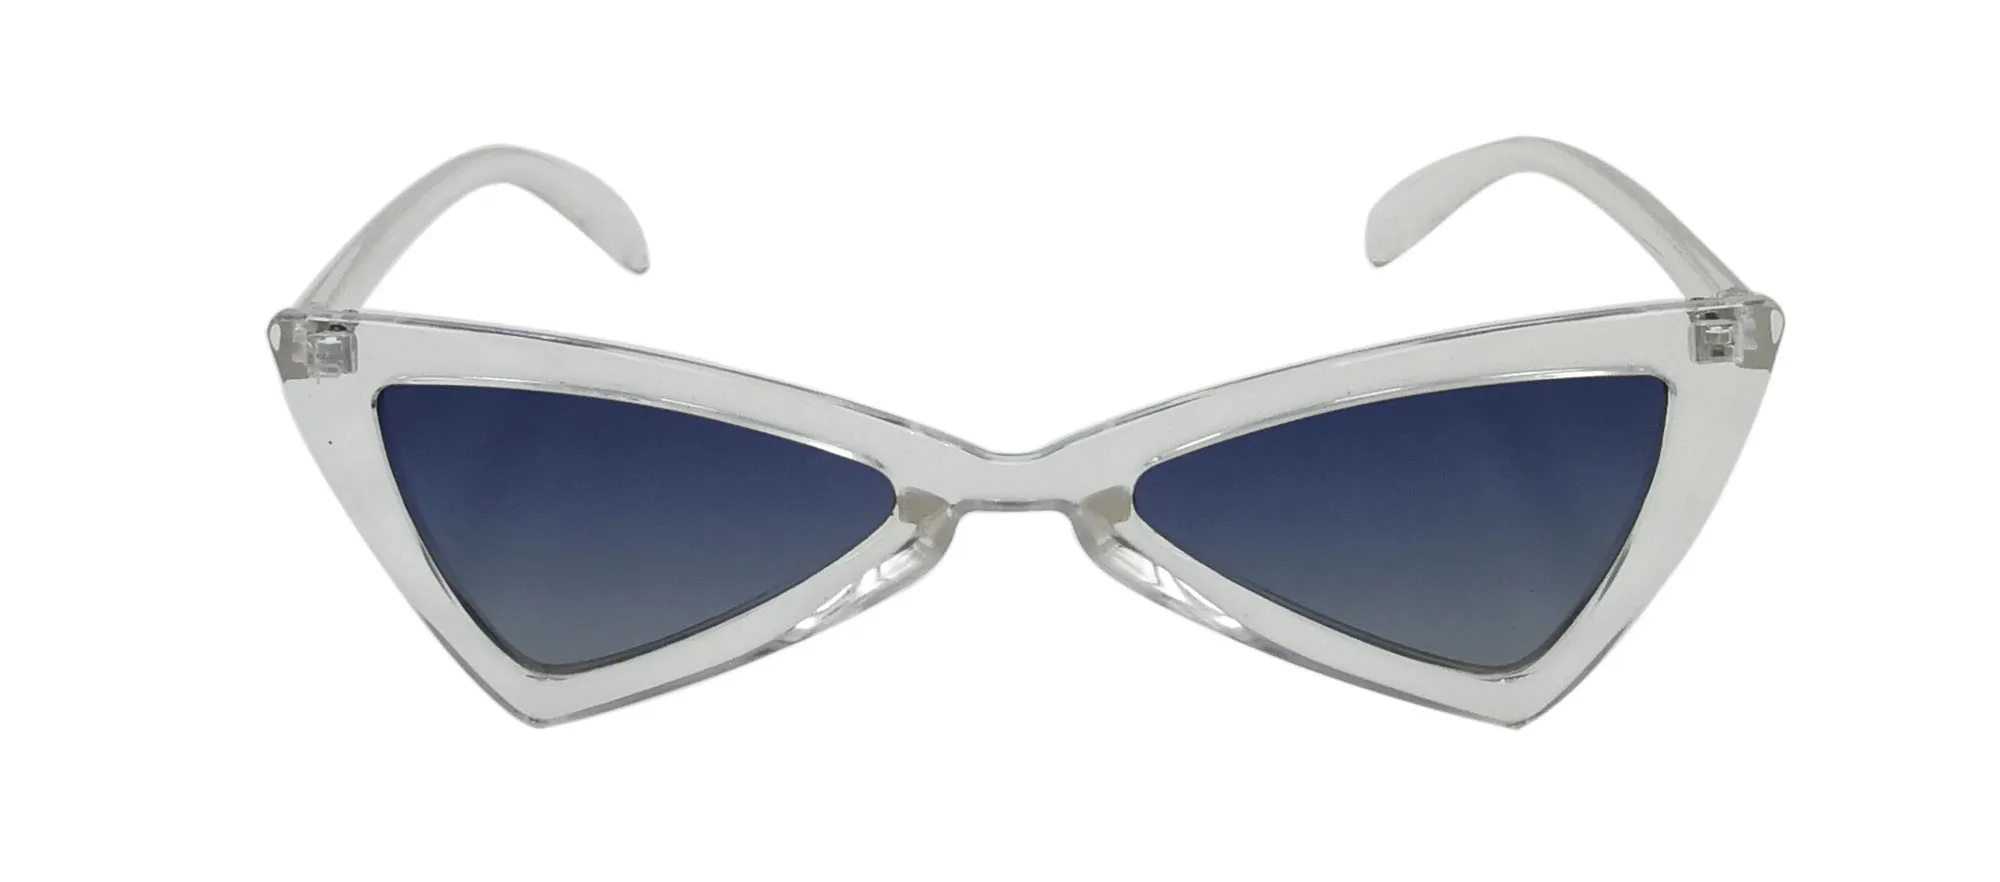 Eugenia beautiful design oversized cat eye sunglasses for Travel-13